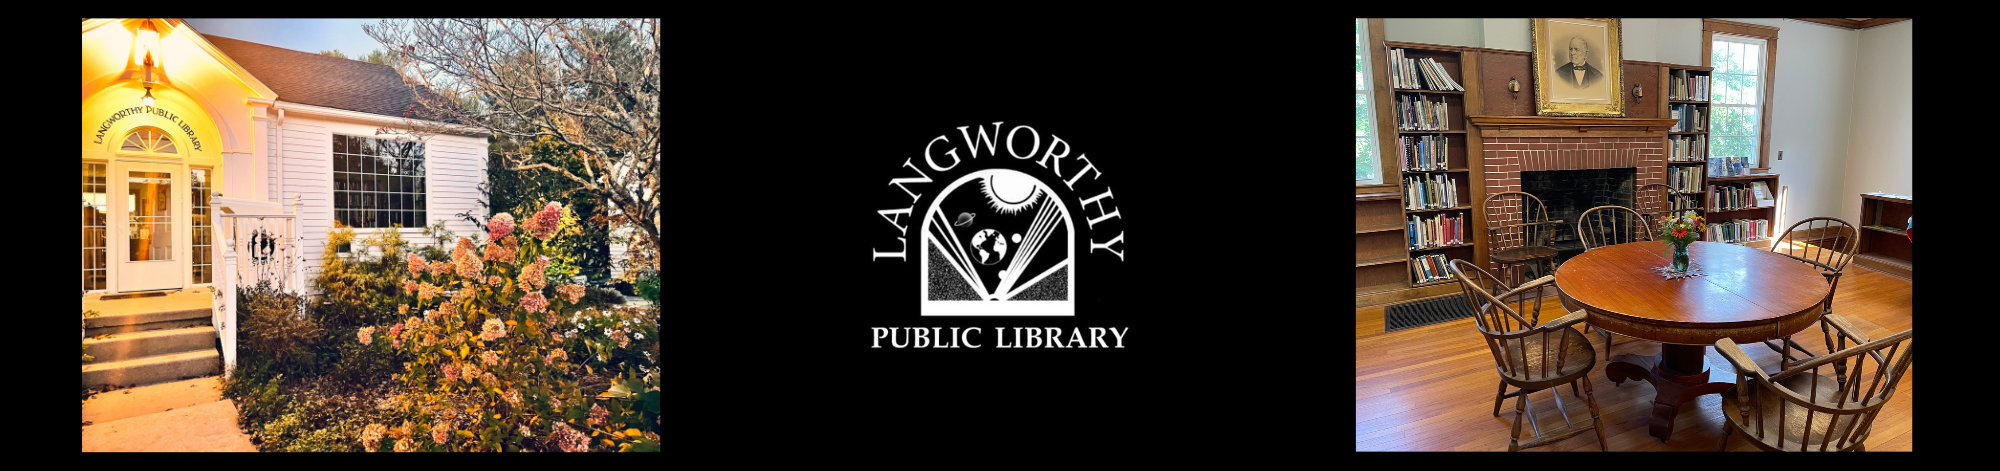 Langworthy Public Library